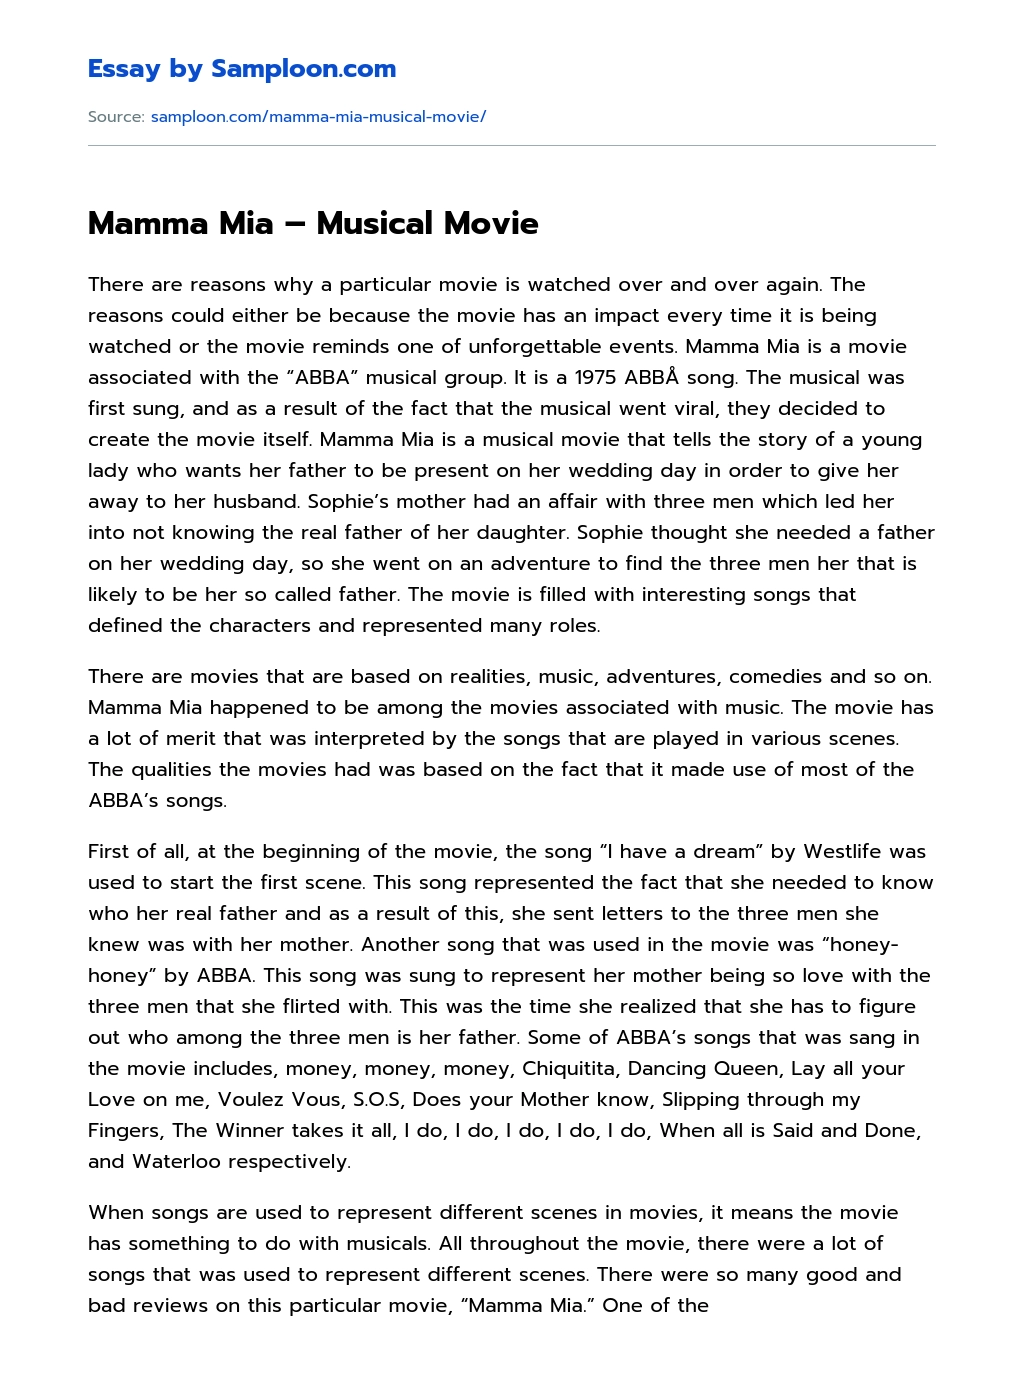 Mamma Mia – Musical Movie Film Analysis essay